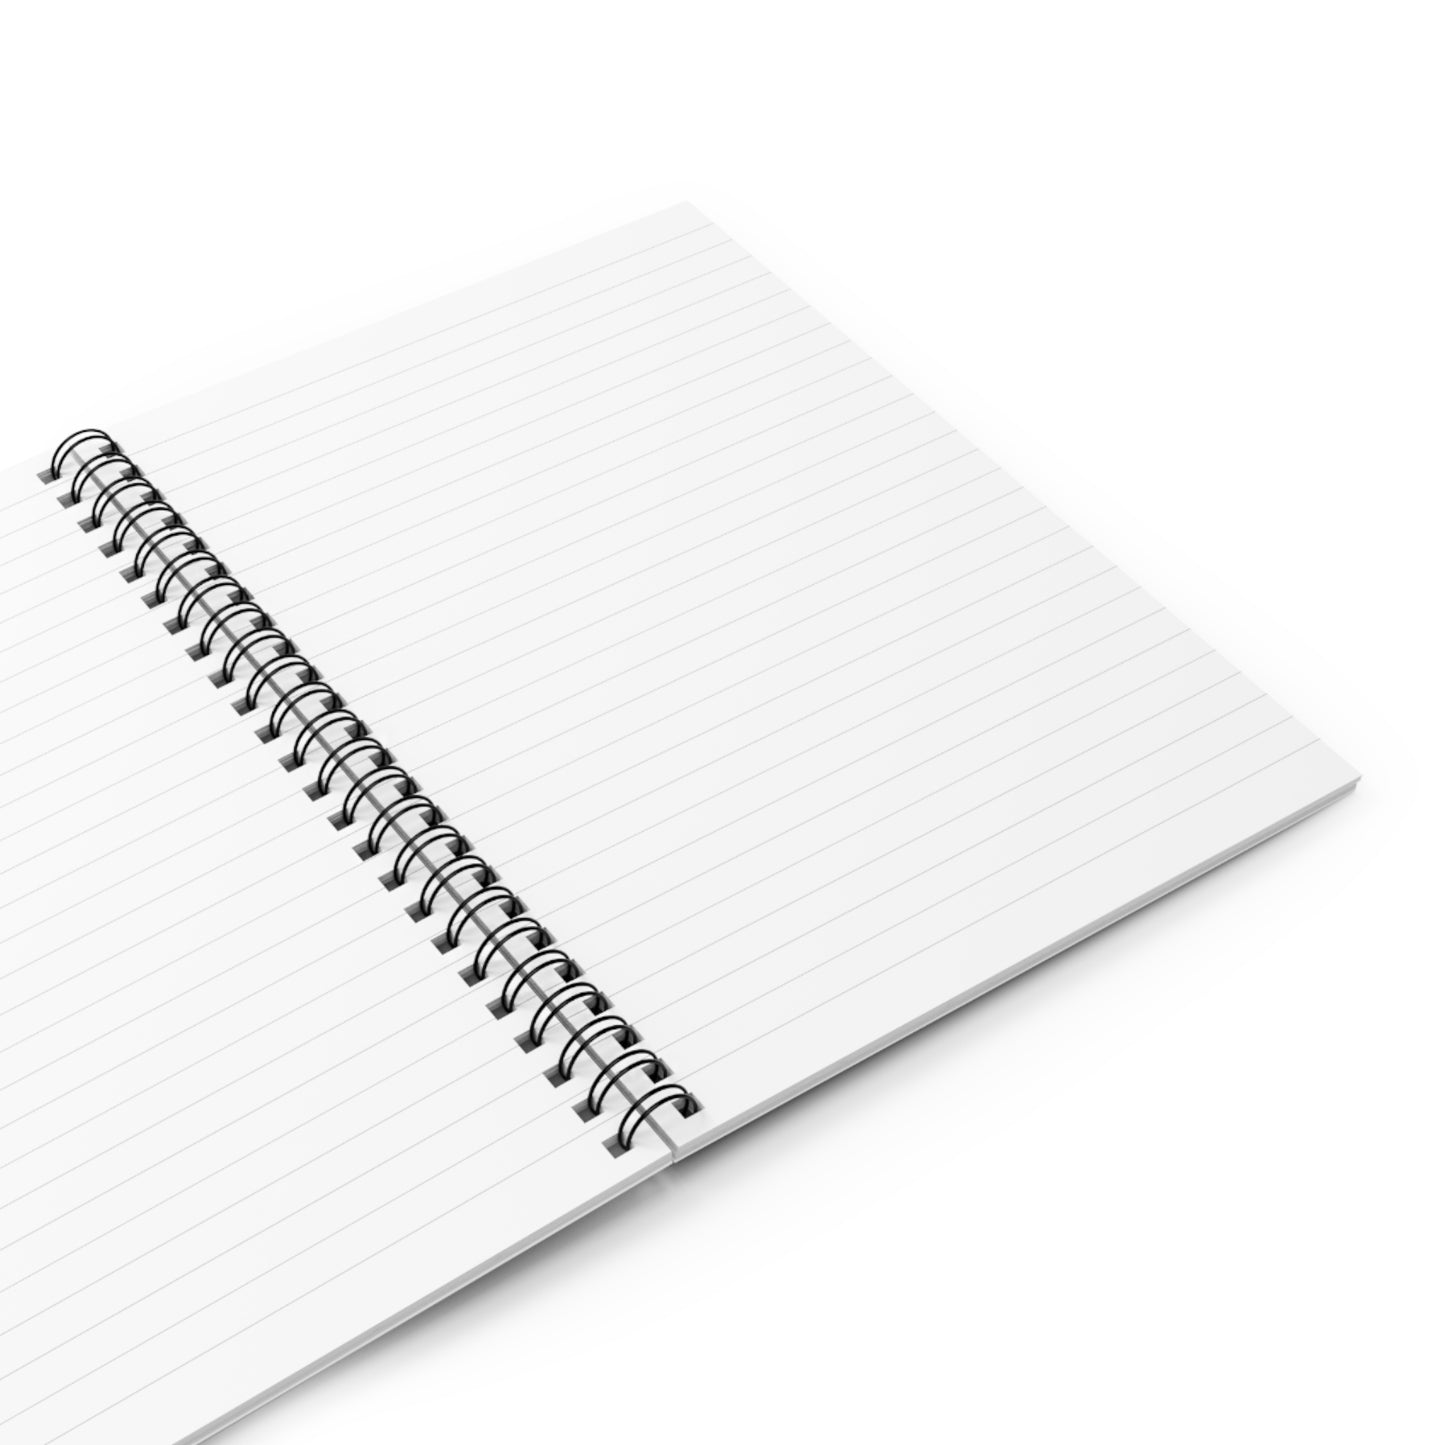 Spiral Notebook - Ruled Line - Rabbit Hole